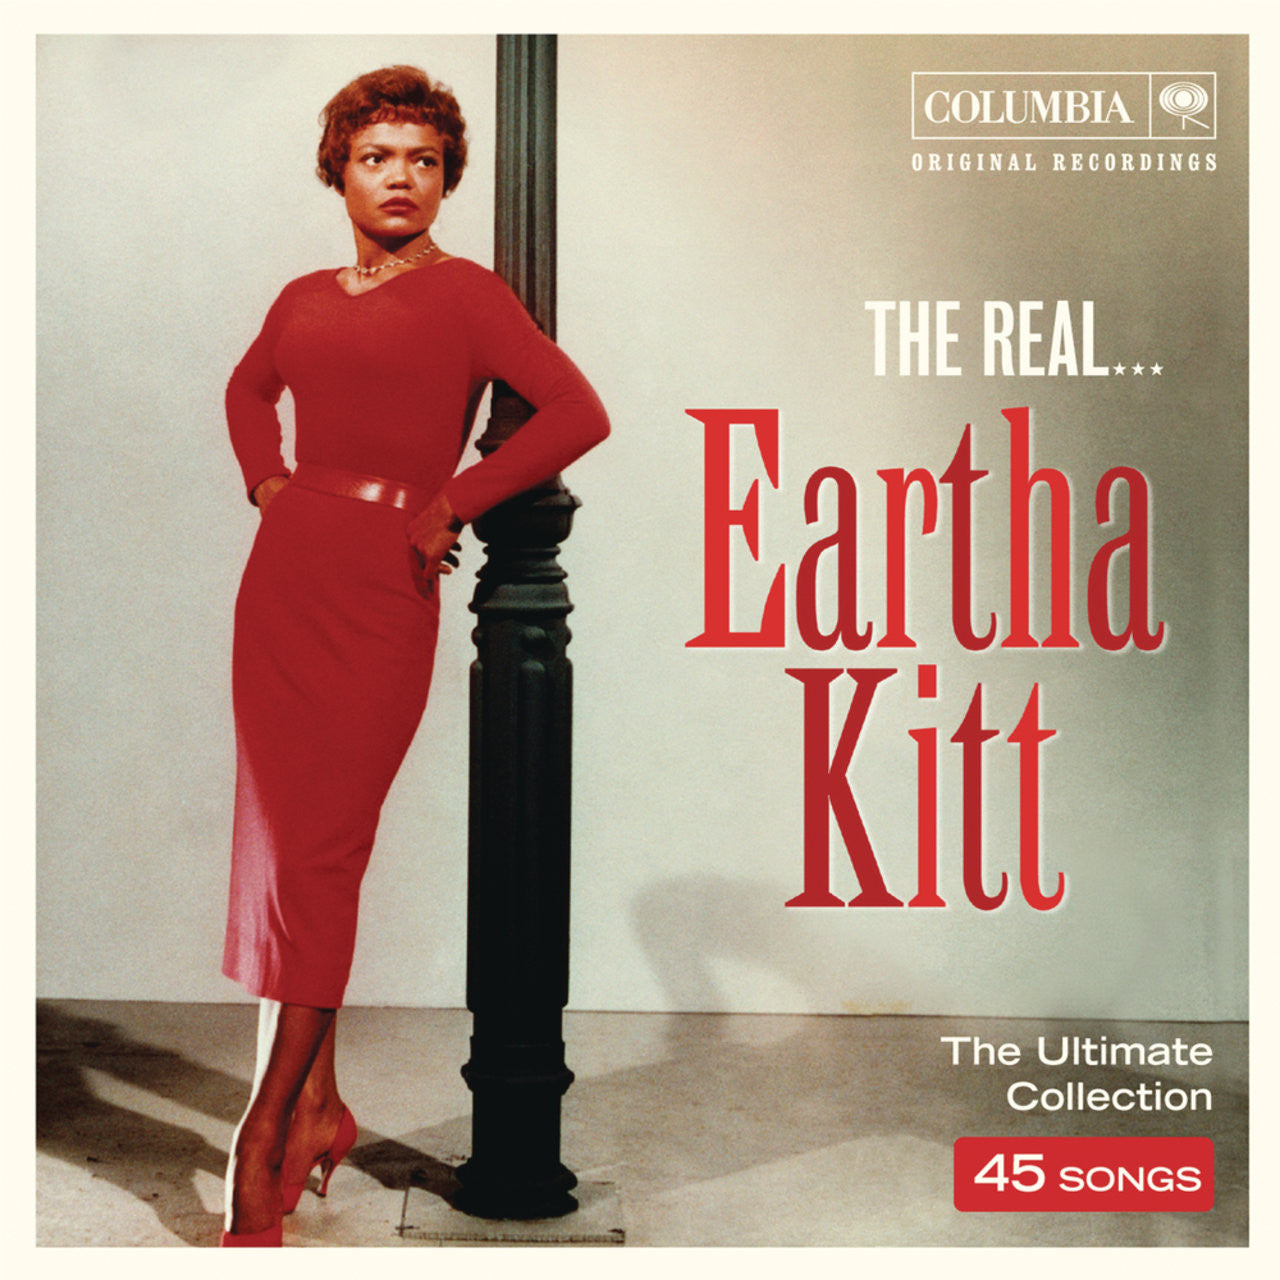 Eartha Kitt - The Real Eartha Kitt CD